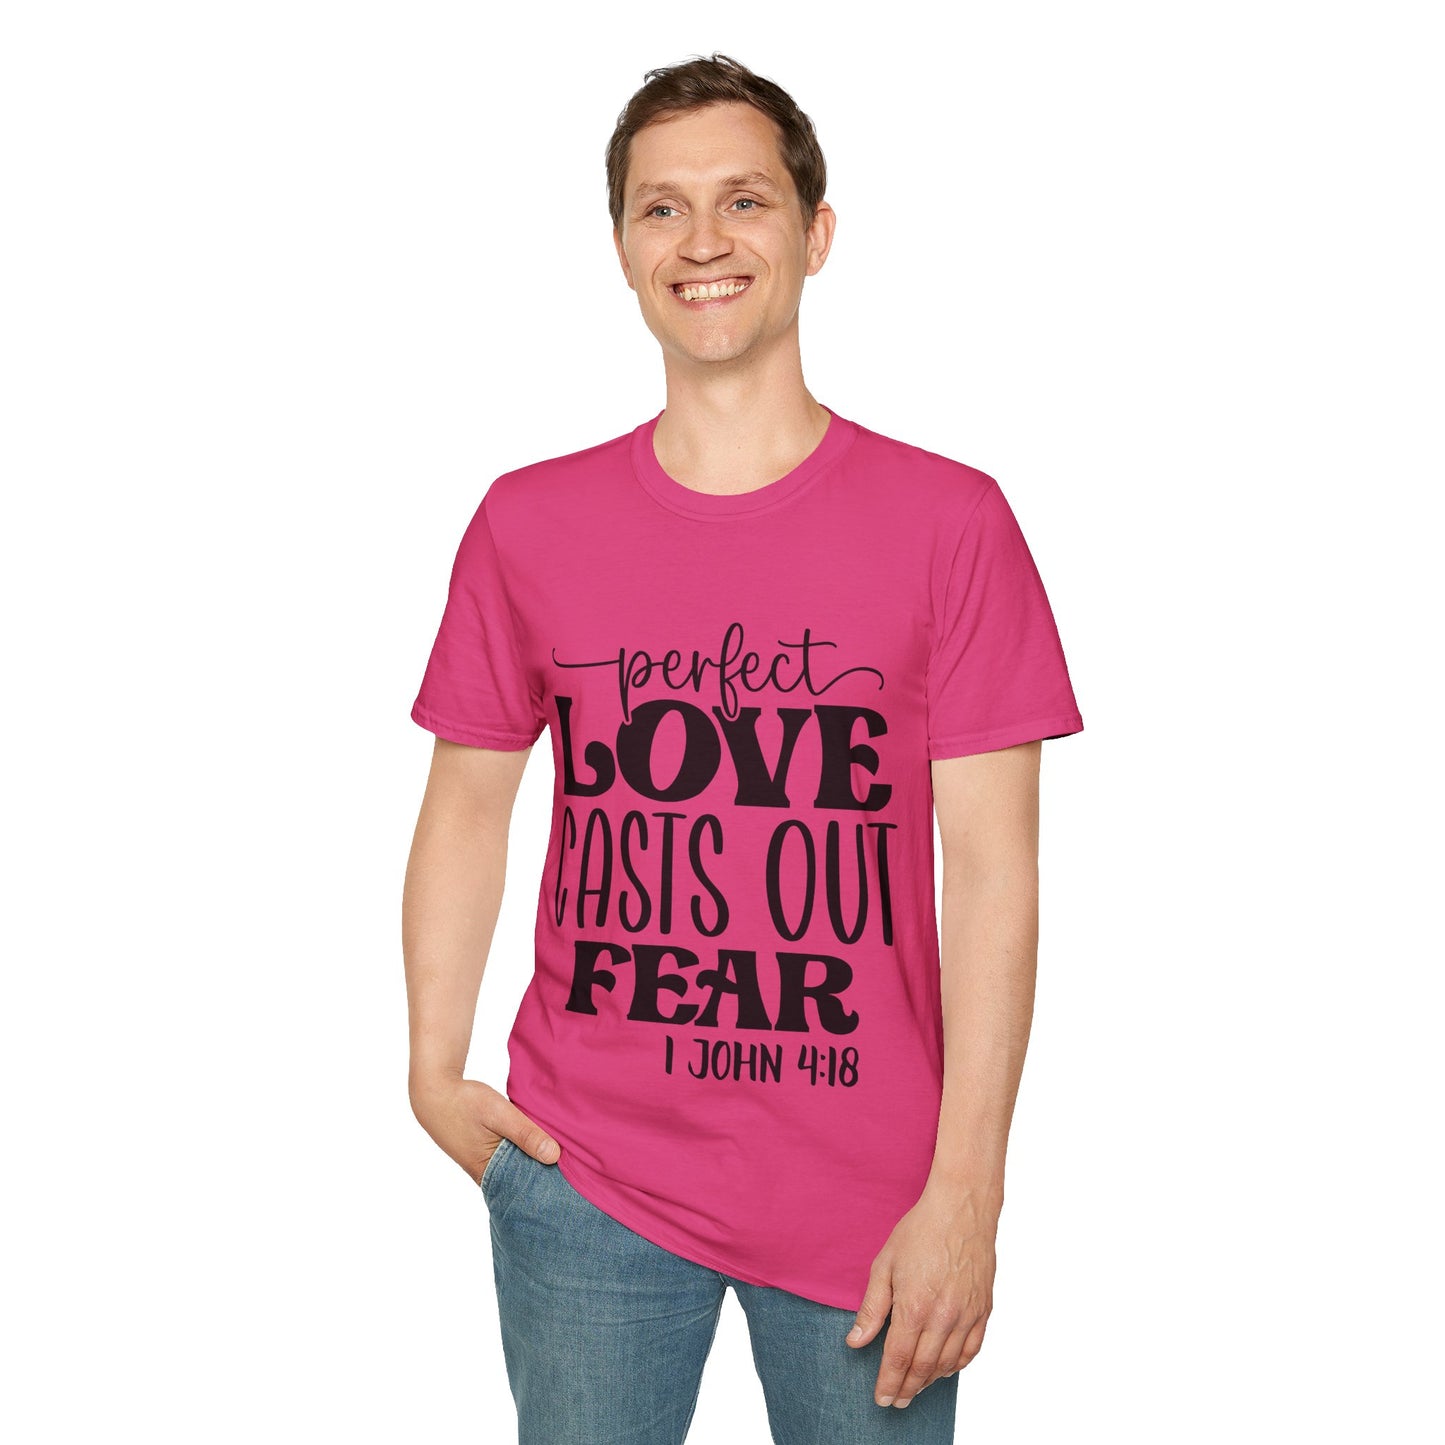 Perfect Love Casts Out Fear 1 John 4:18 Triple Viking T-Shirt